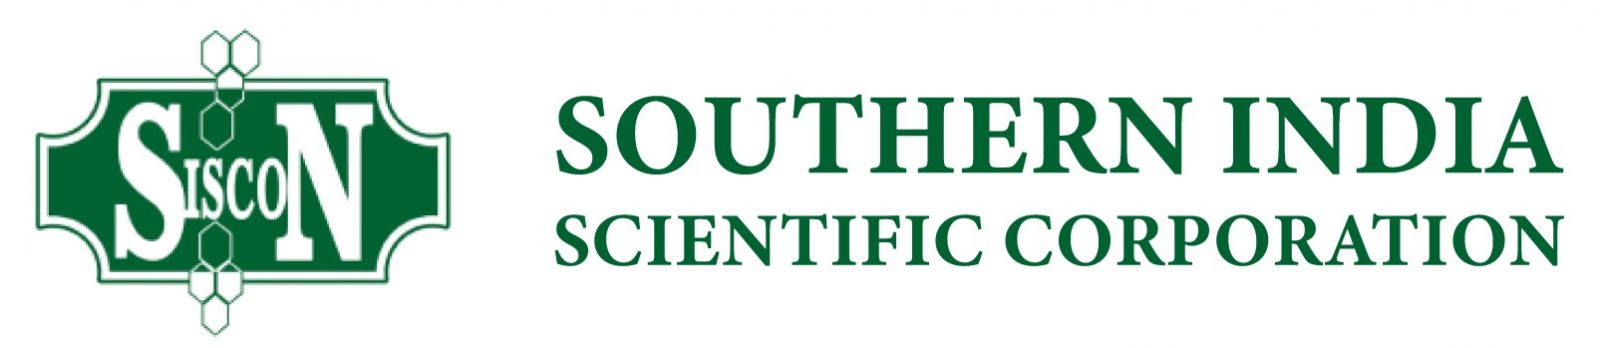 Southern India Scientific Corporation